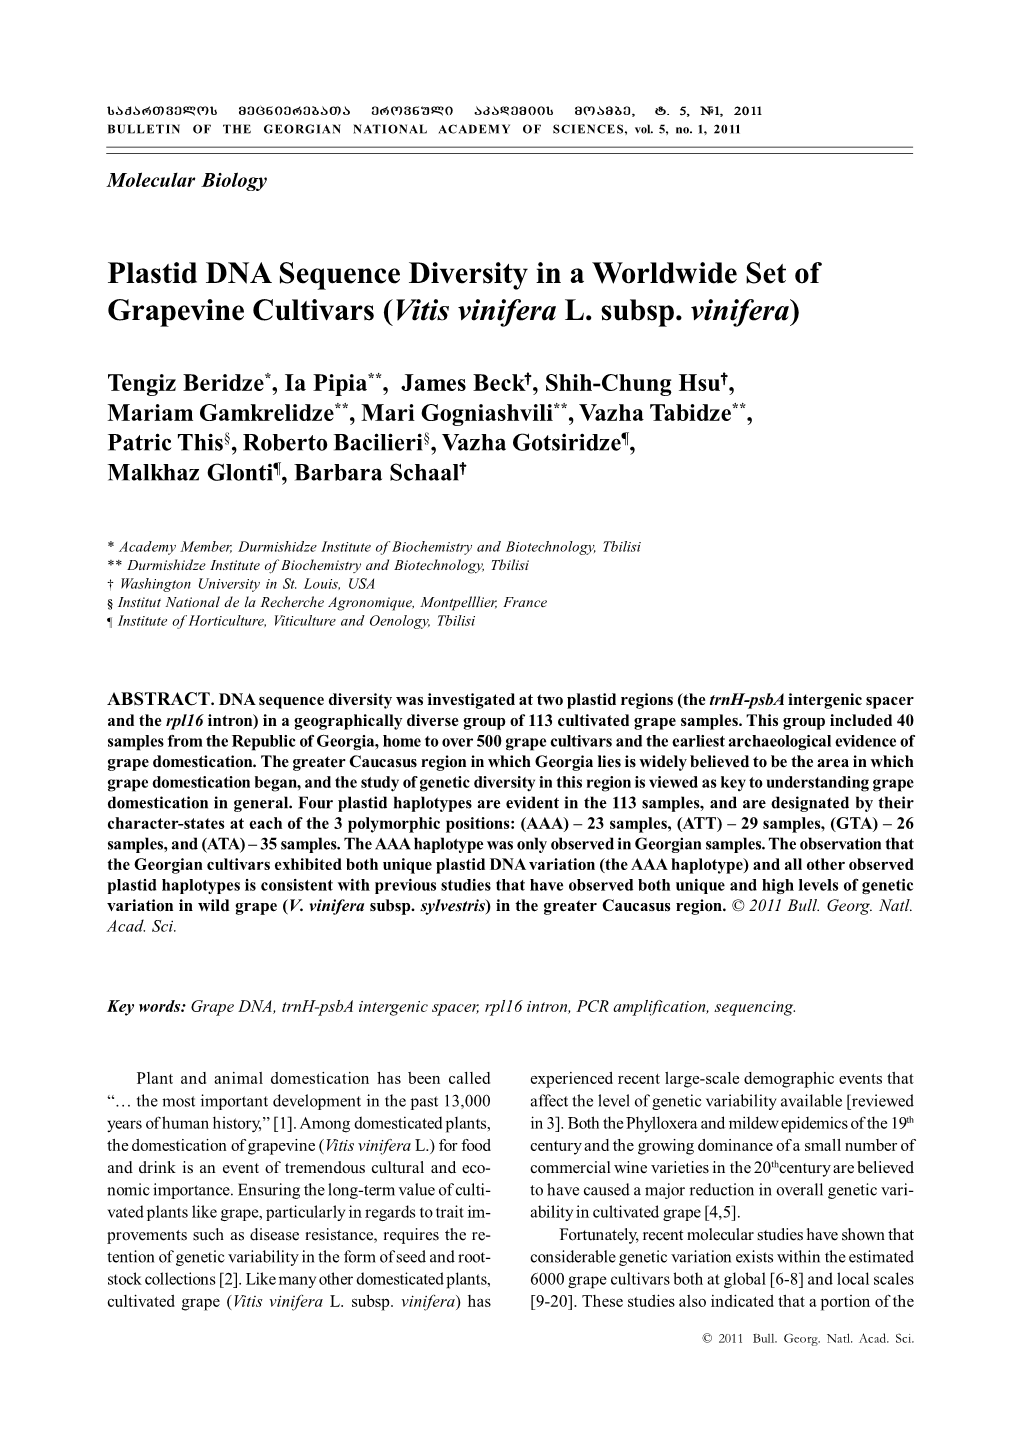 Plastid DNA Sequence Diversity in a Worldwide Set of Grapevine Cultivars (Vitis Vinifera L. Subsp. Vinifera)